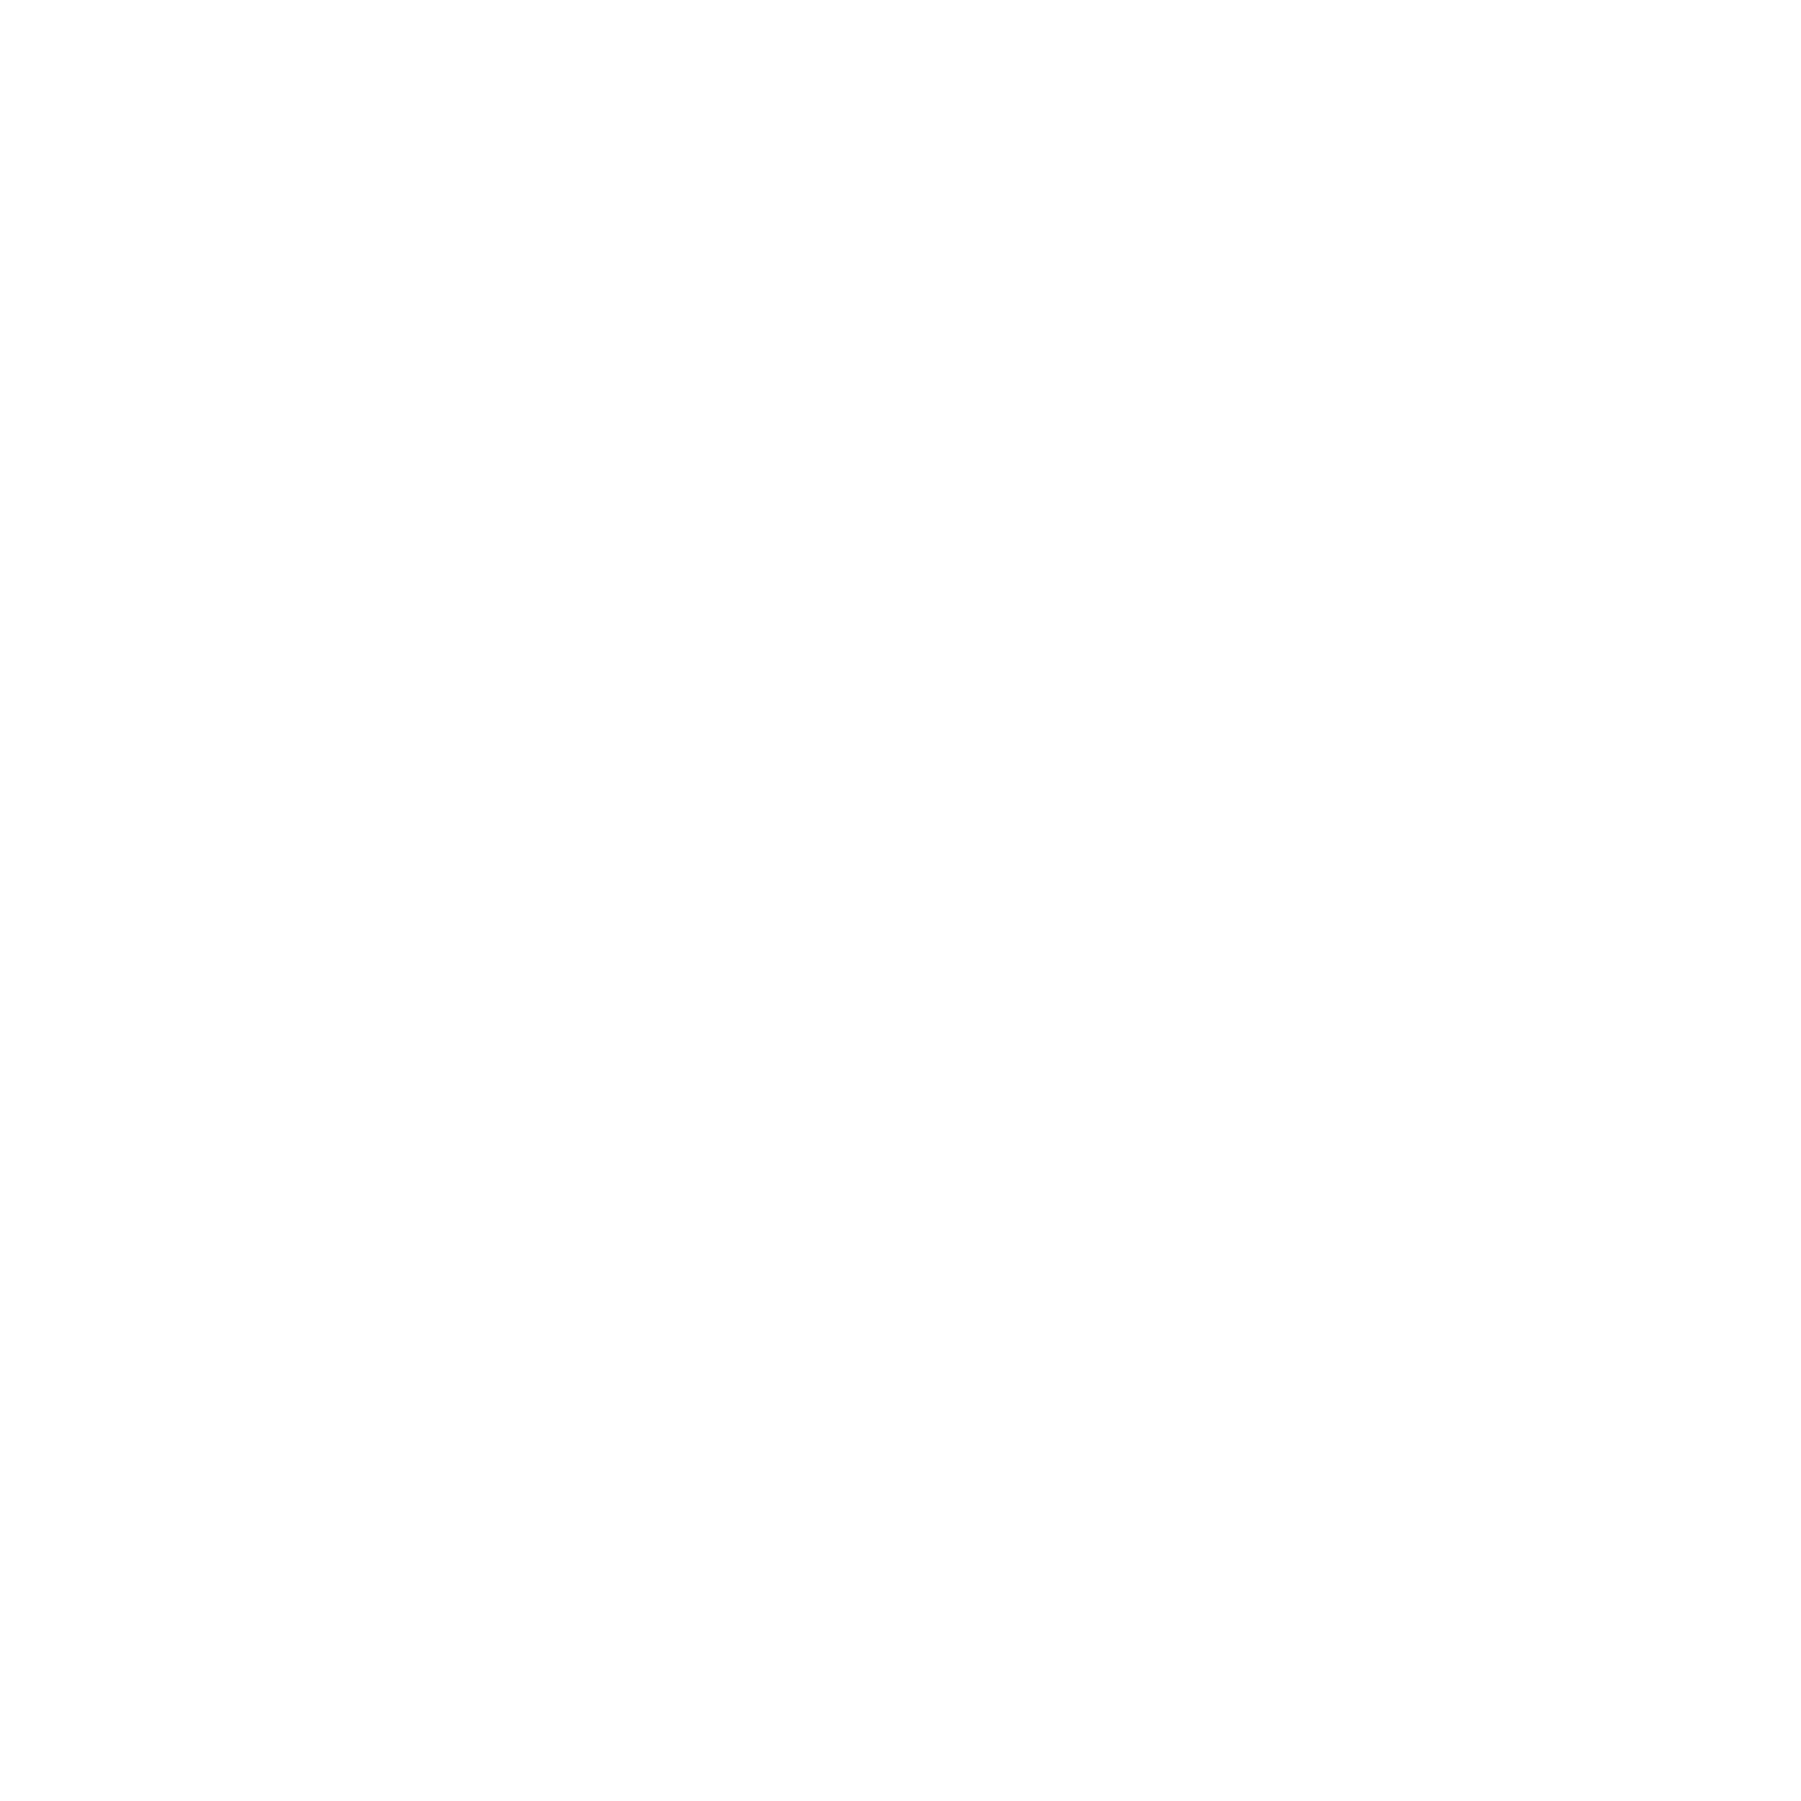 2021-bsm_square-logo